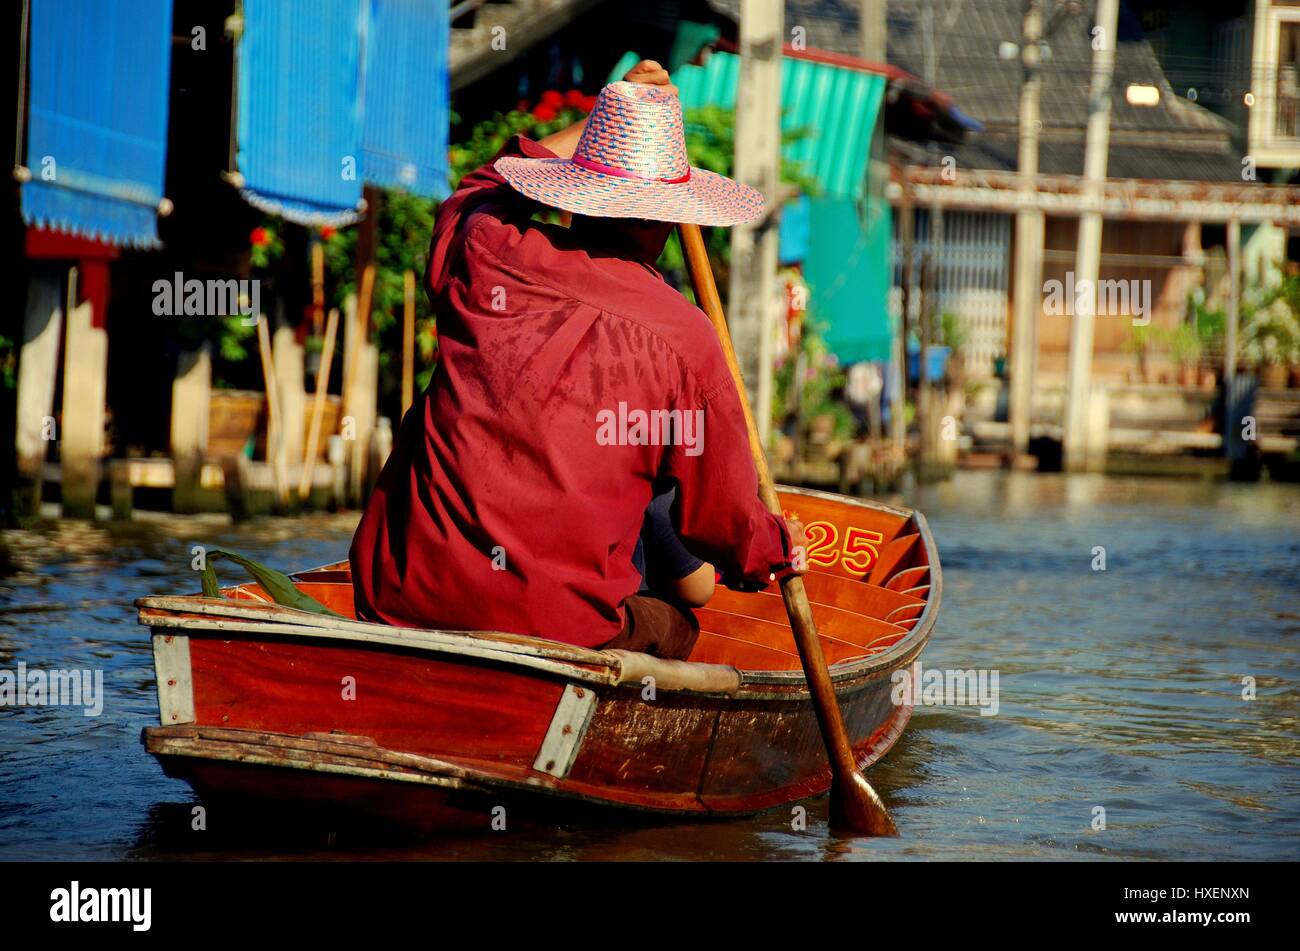 Damnoen Saduak, Thailand - 9. Januar 2010: Bootsmann Paddel seinem Holzboot entlang eines Kanals an der Damnoen Saduak Floating Market * Stockfoto